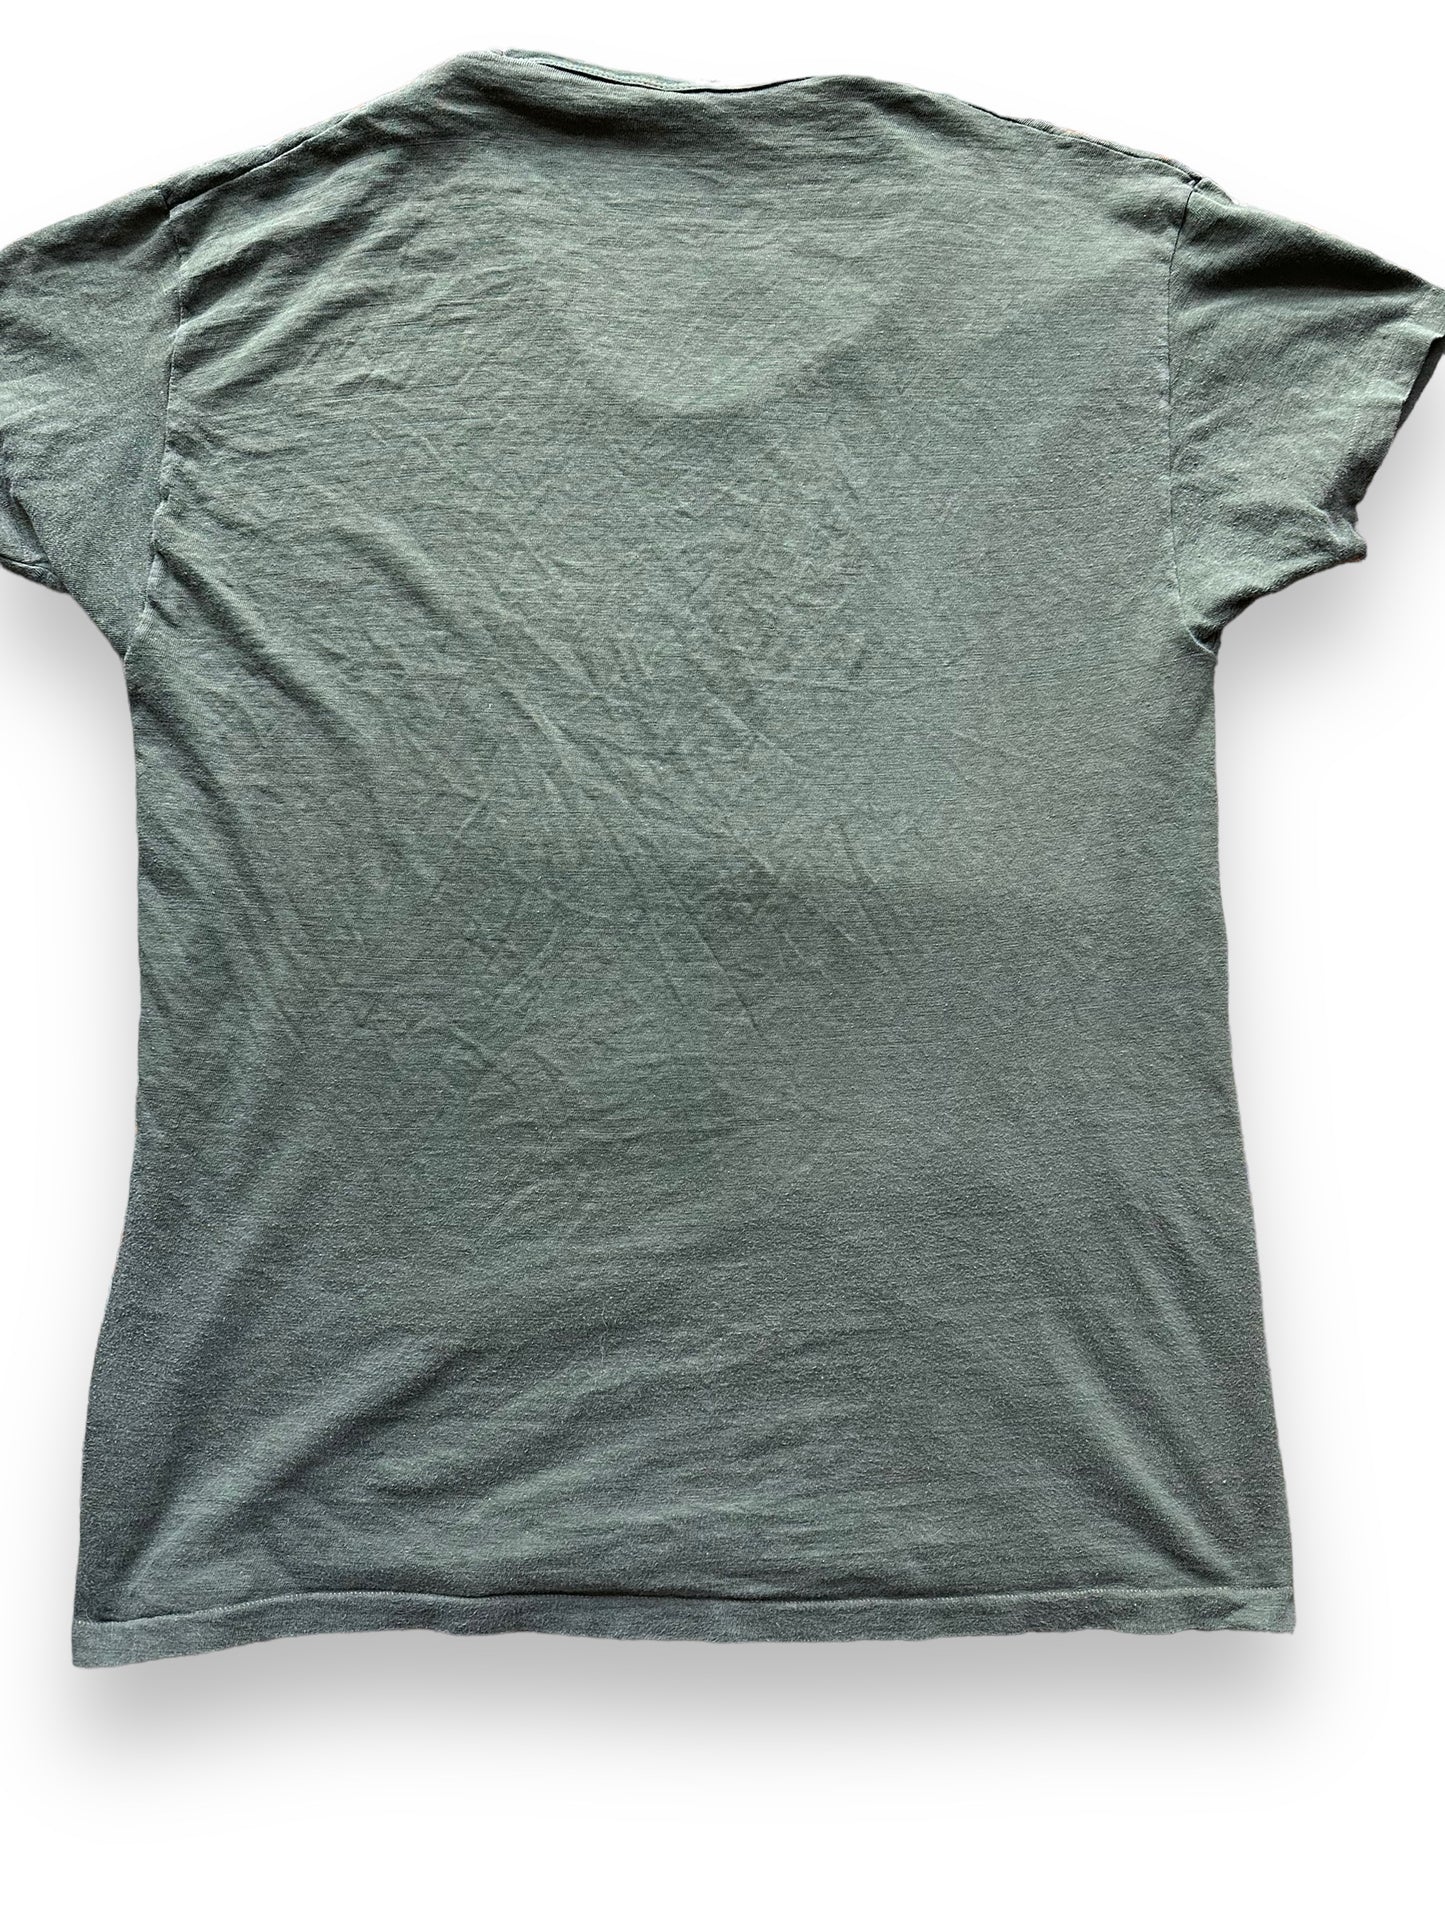 Rear Detail on Vintage Green Hanes Blank Tee SZ XL | Vintage Blank T-Shirts Seattle | Barn Owl Vintage Tees Seattle